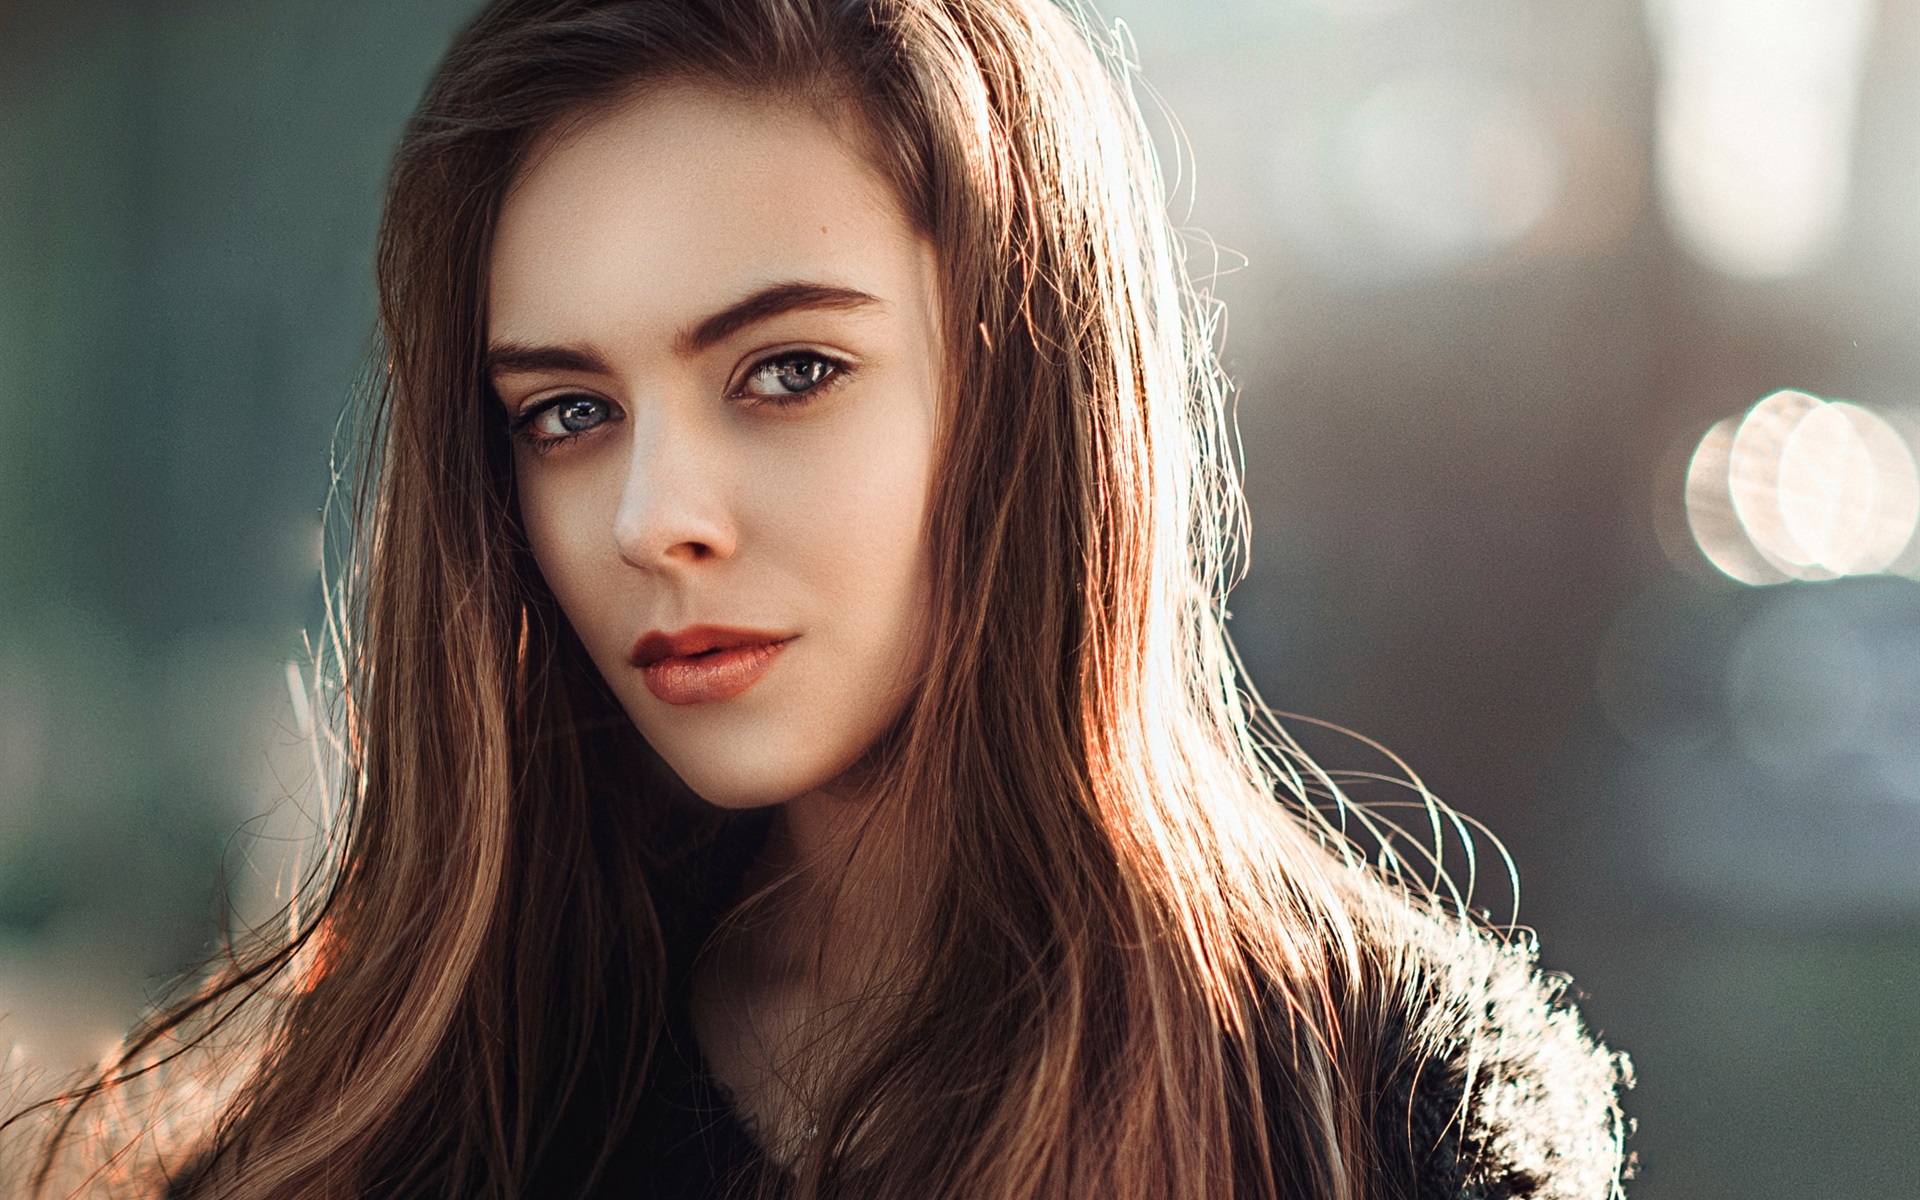 Kate-Russian-girl-portrait-sunlight_1920x1200